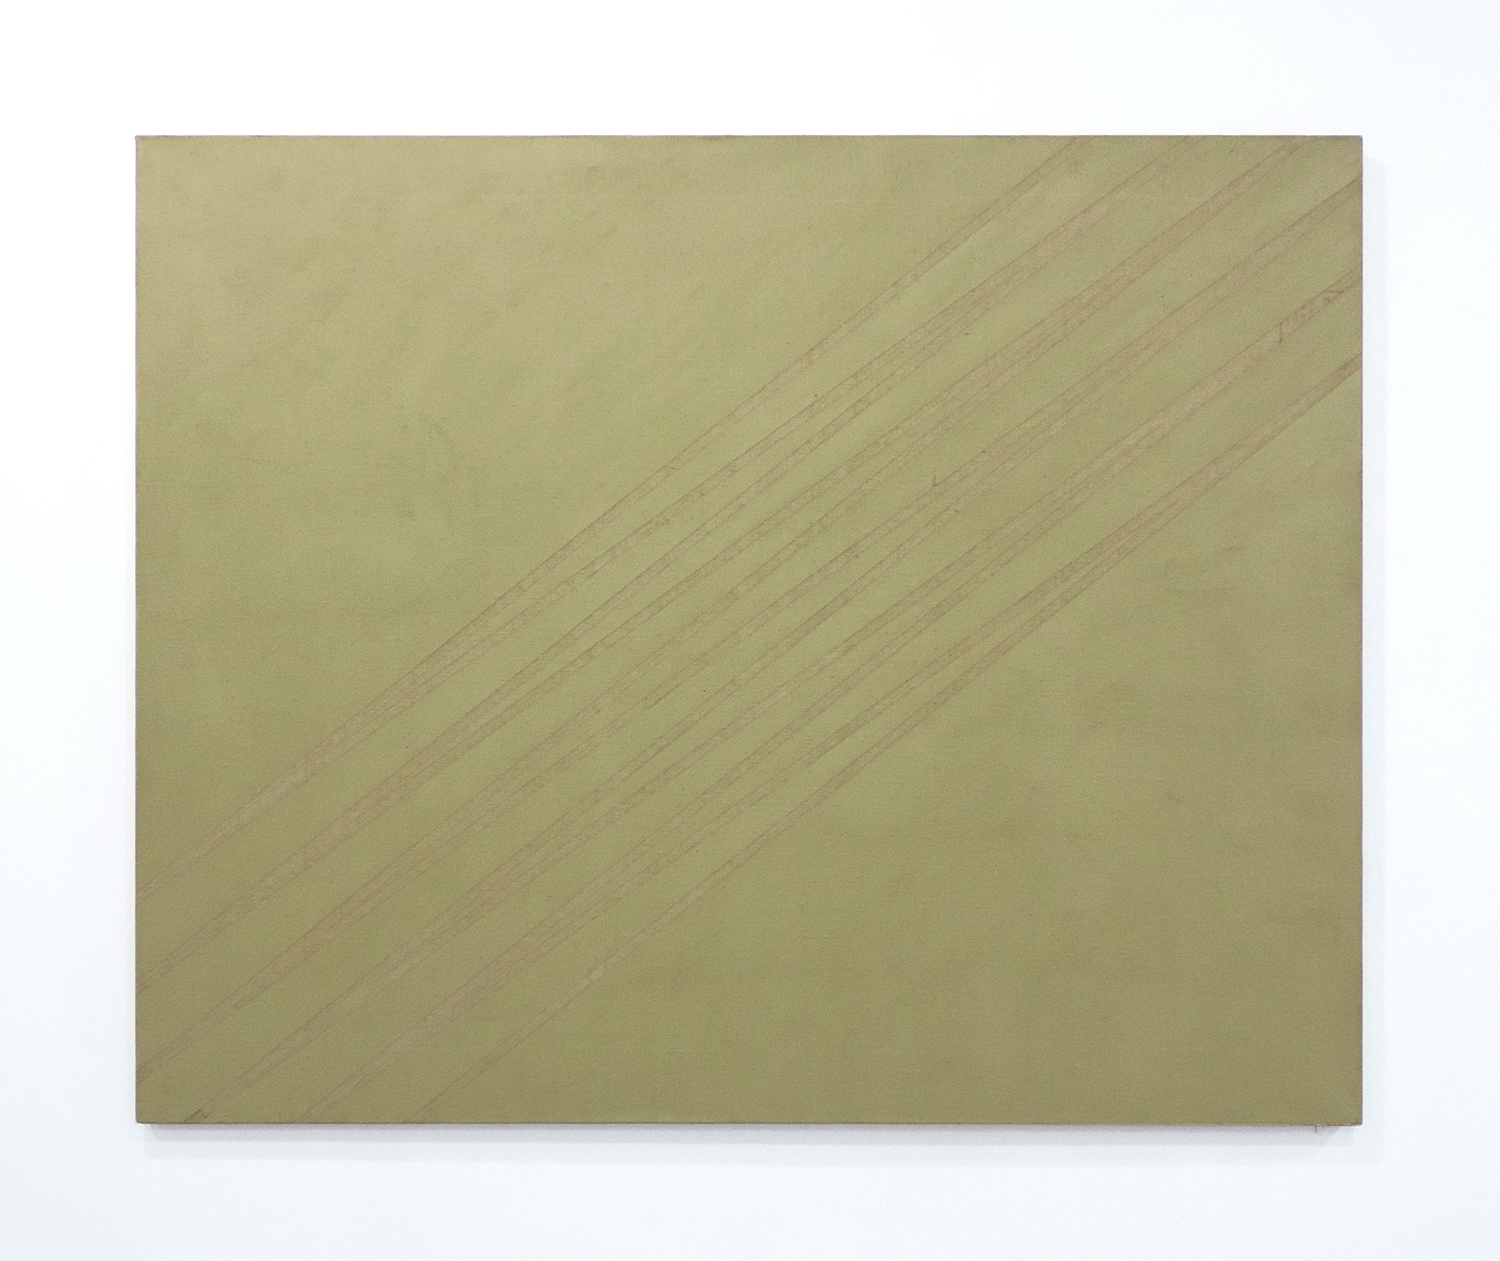 Untitled-ocher No.2-1　/ Oil, pencil on Canvas,162 x 130.5 cm,1973